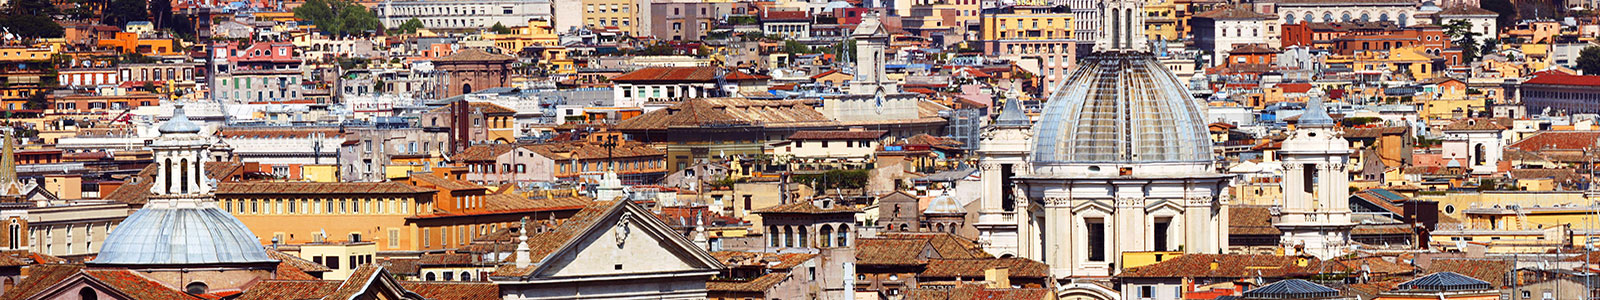 №1219 - Центр Рима - панорамный вид